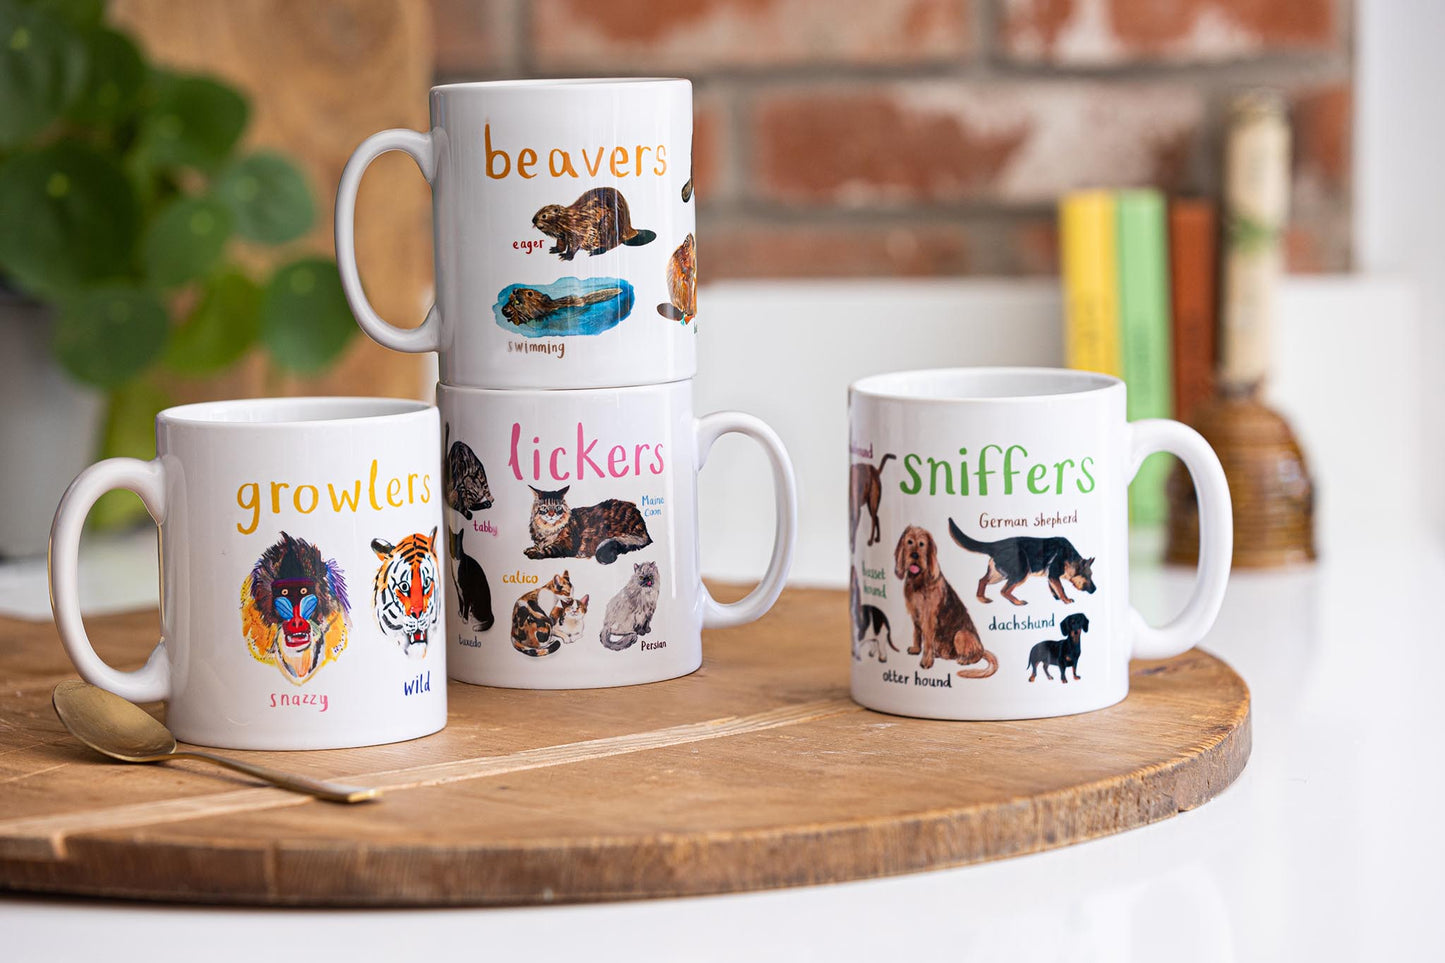 Set of 4 Ceramic Animal Mugs - Beavers, Growlers, Lickers and Sniffers